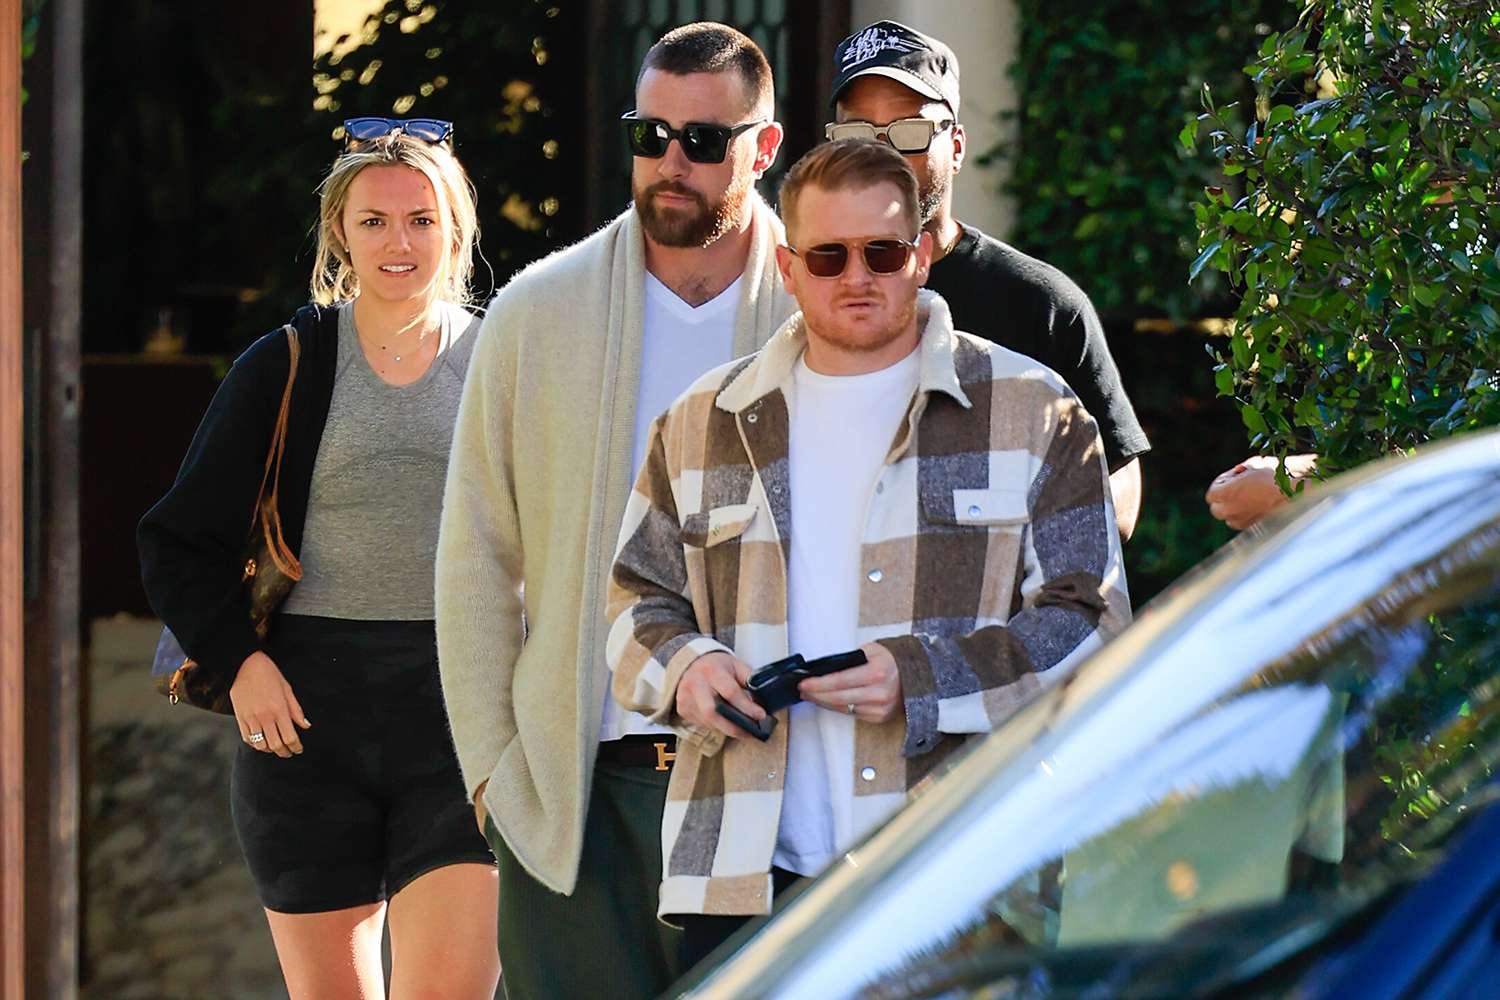 "Travis Kelce Spotted Arriving at Taylor Swift's $25M Beverly Hills Mansion - Superstar Couple Enjoy More Time Together Post Glitzy Oscars Bash"